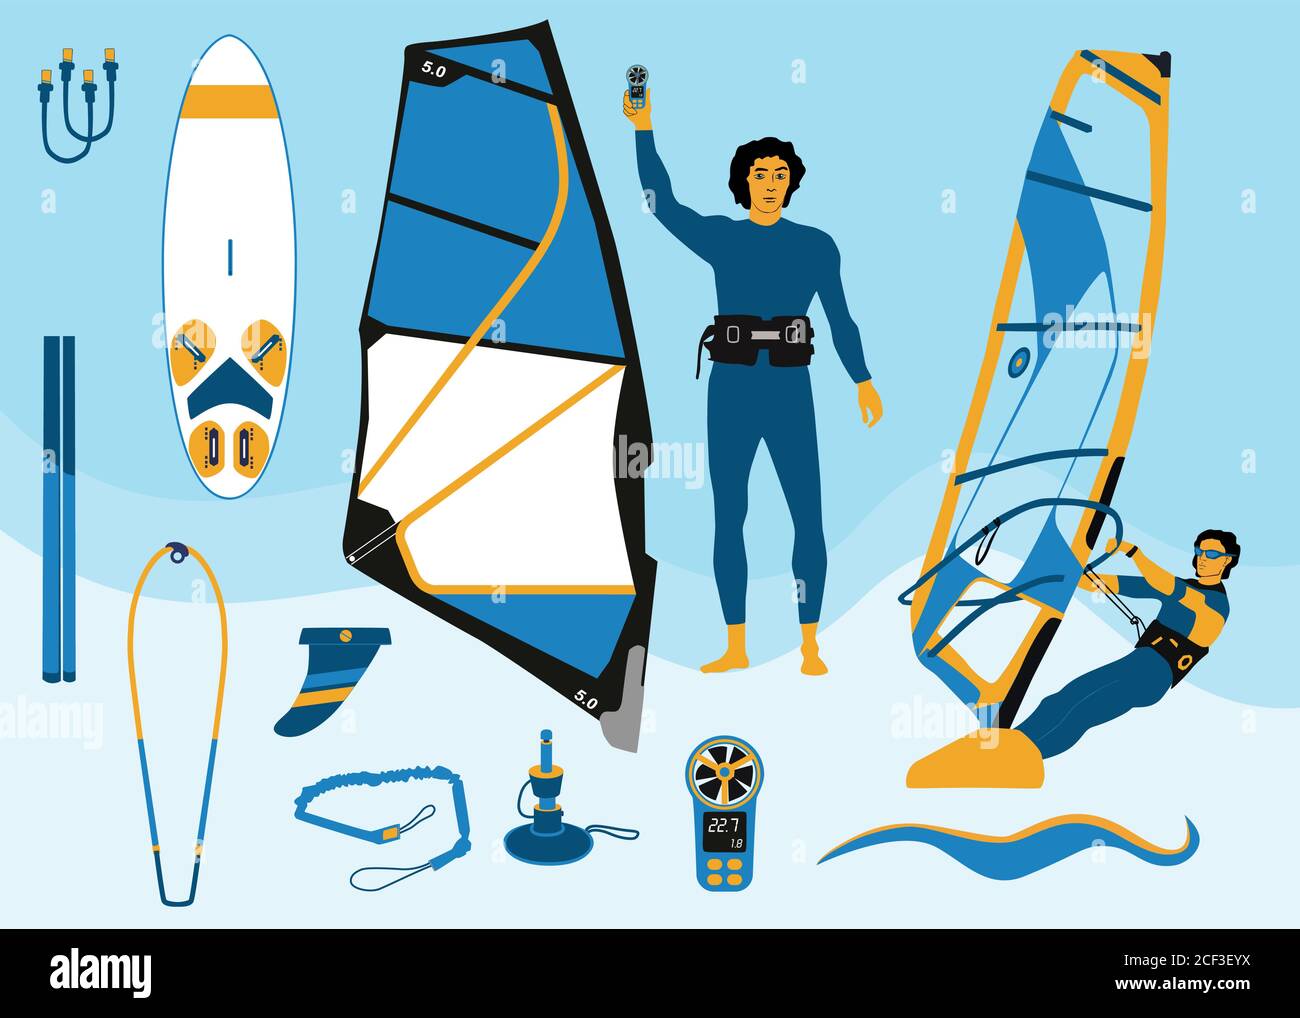 https://c8.alamy.com/comp/2CF3EYX/windsurf-icons-set-2CF3EYX.jpg